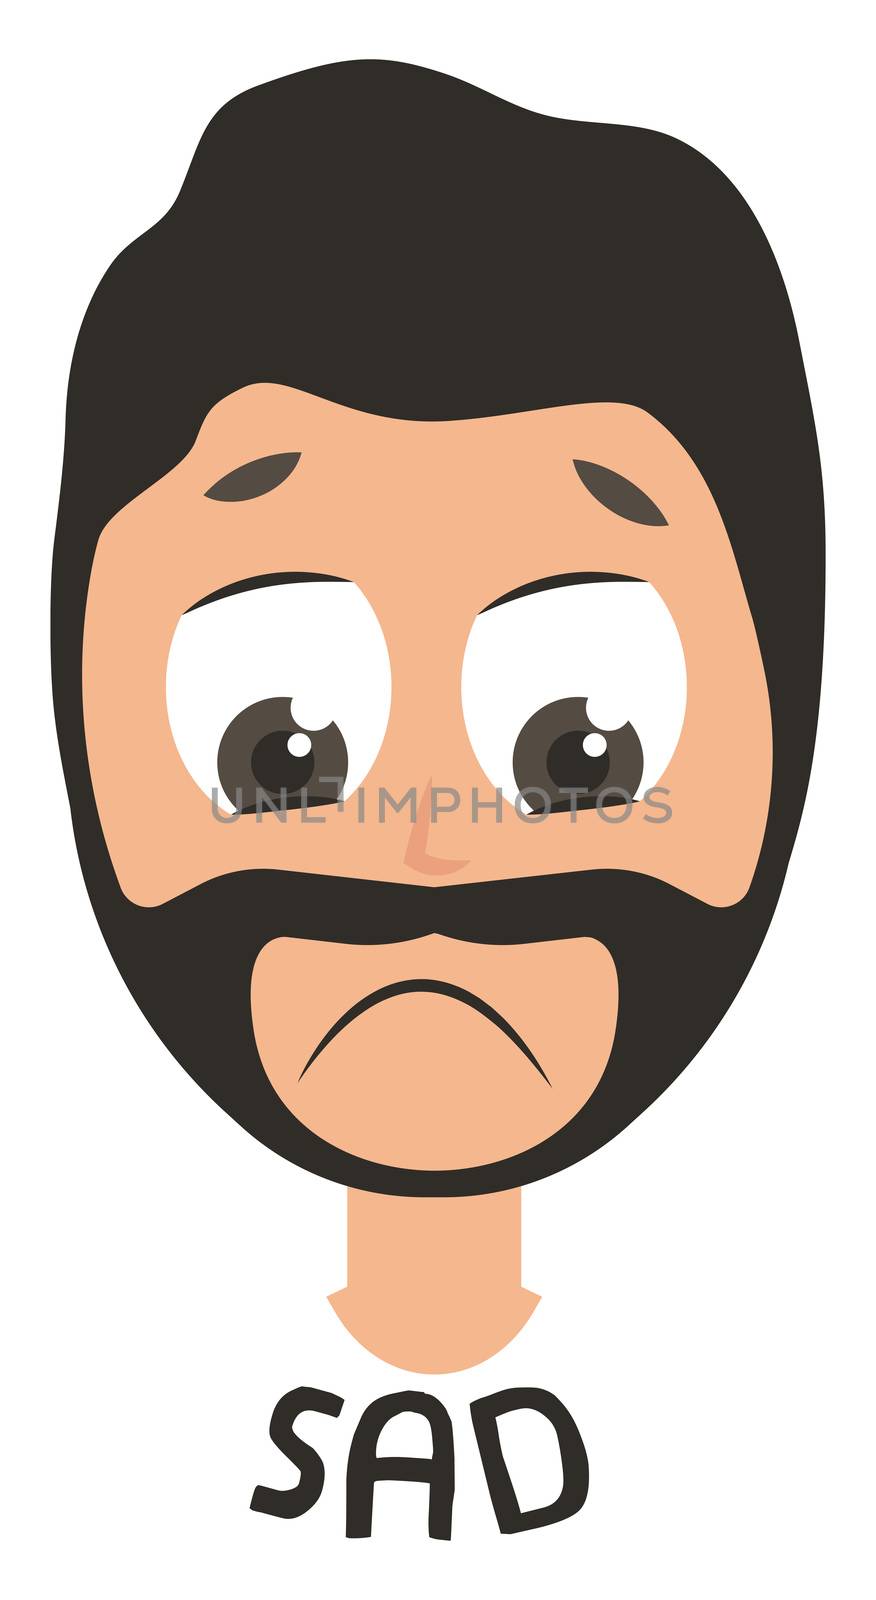 Sad man emoji, illustration, vector on white background by Morphart